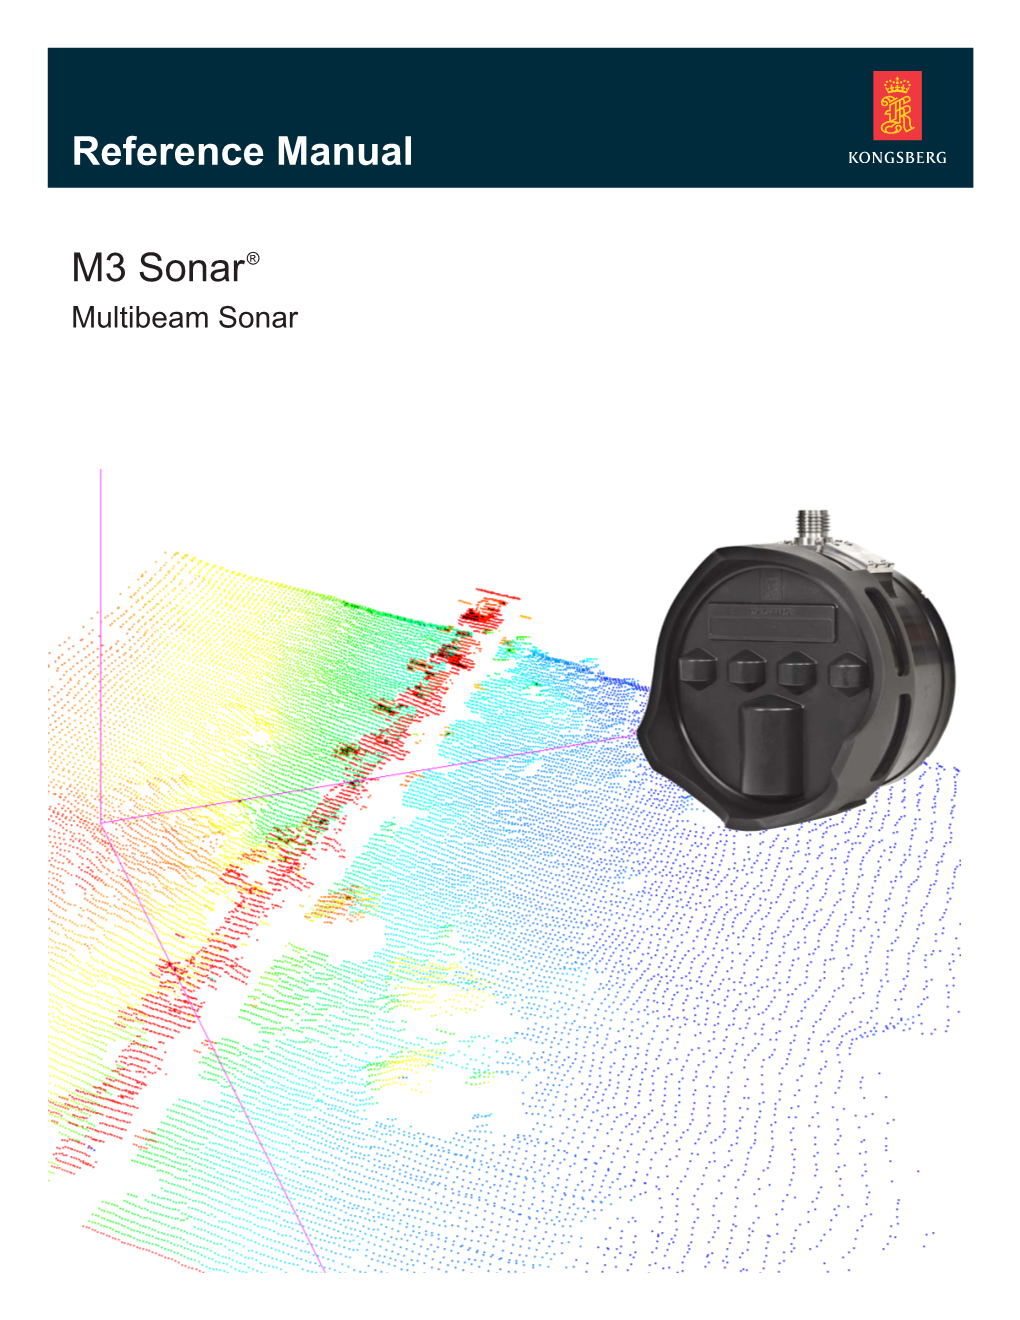 Reference Manual M3 Sonar